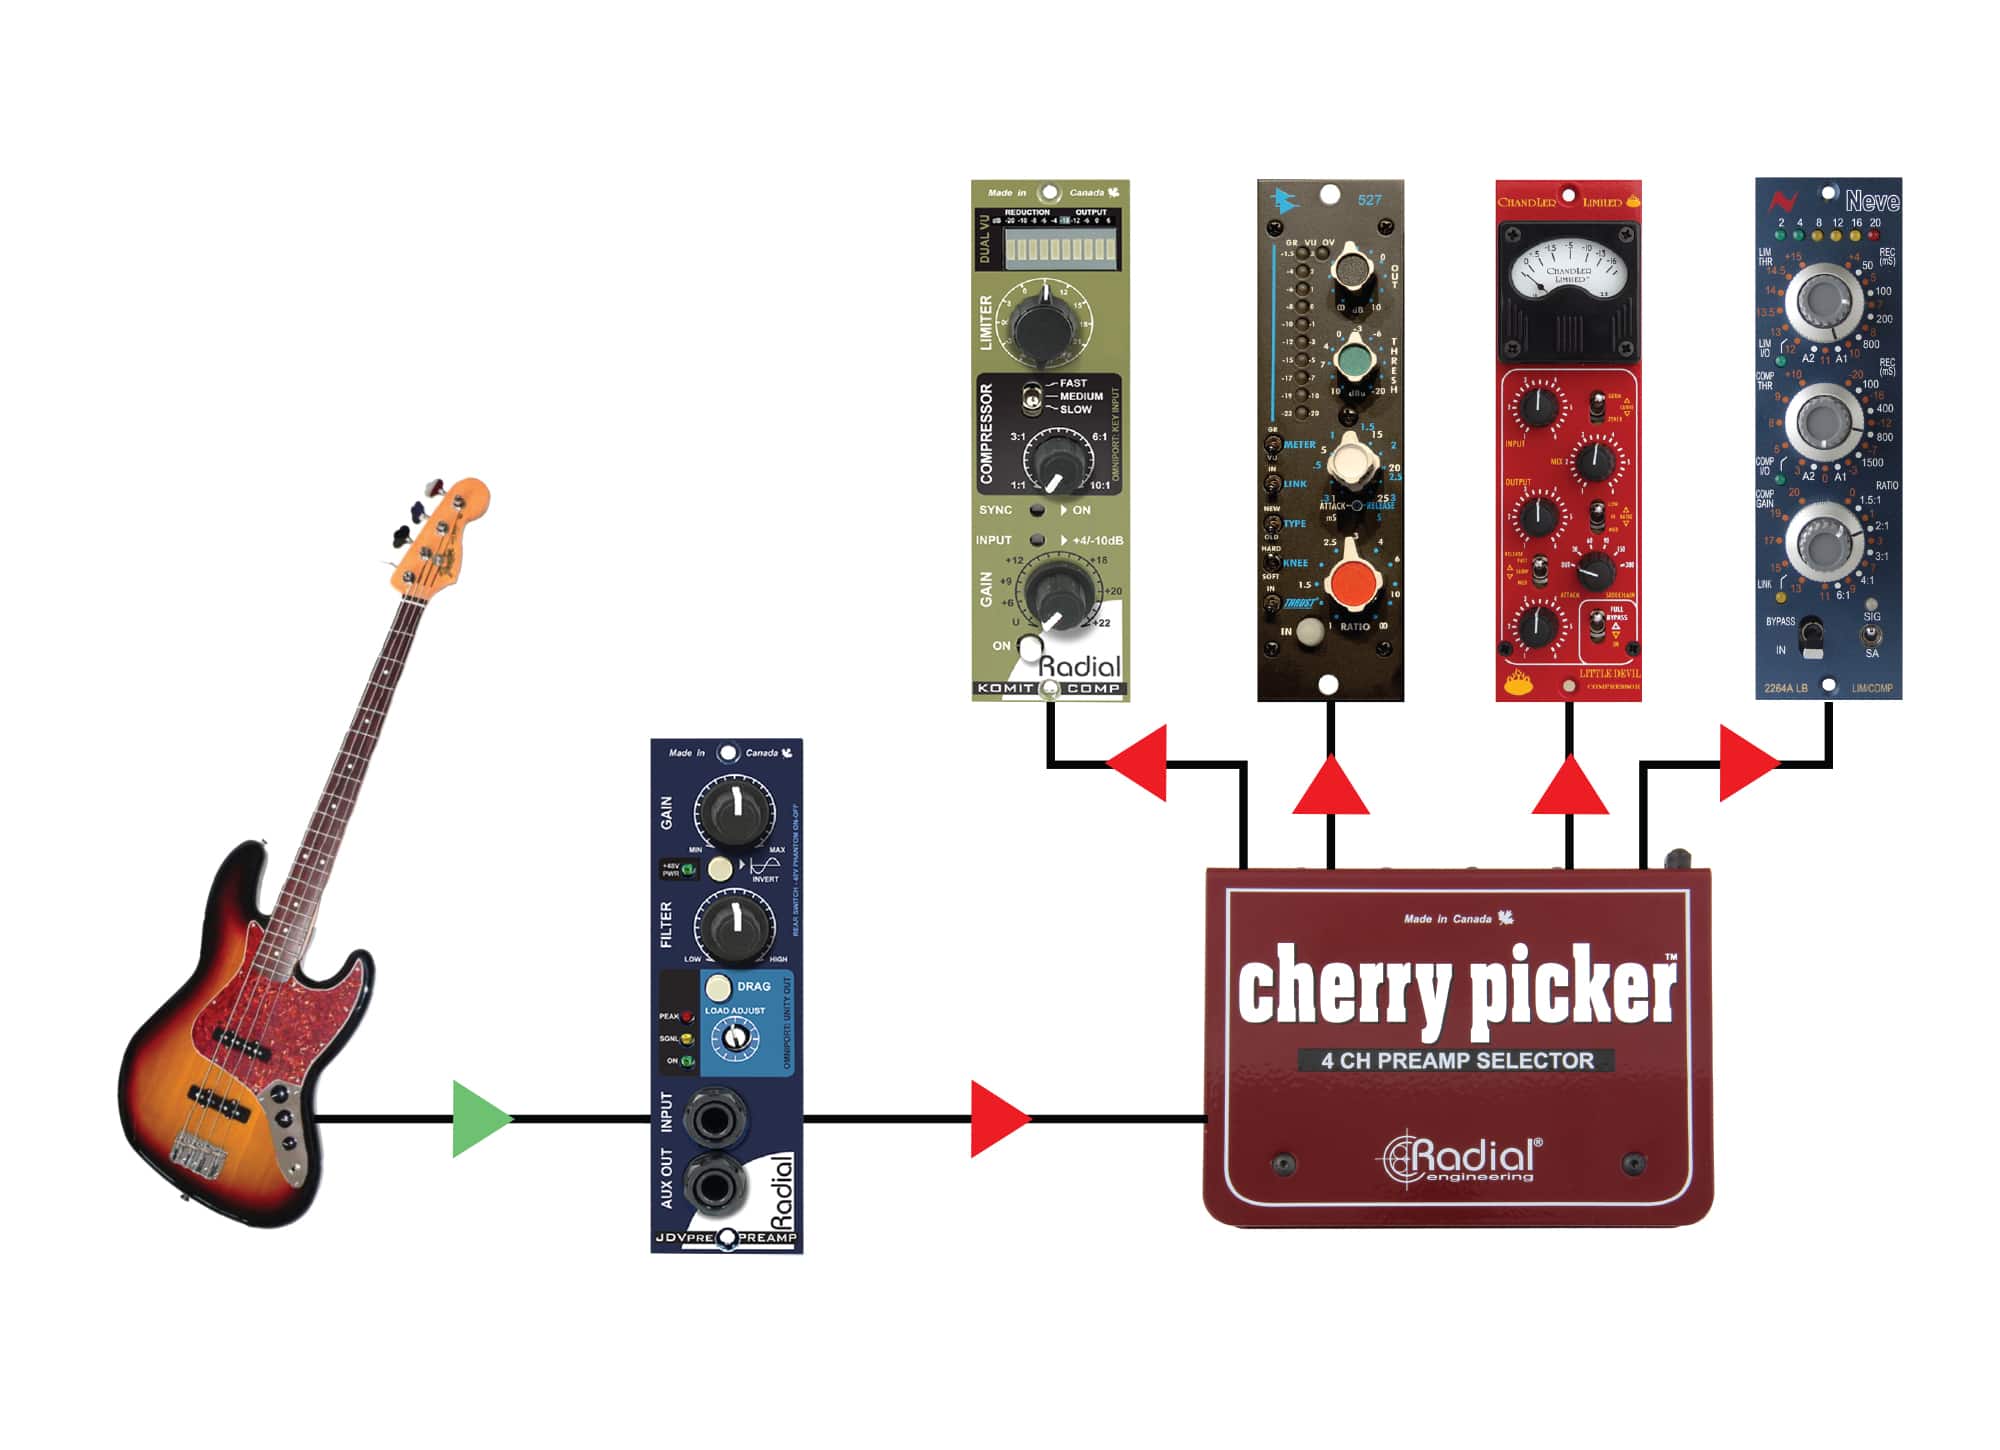 Cherry picker application image